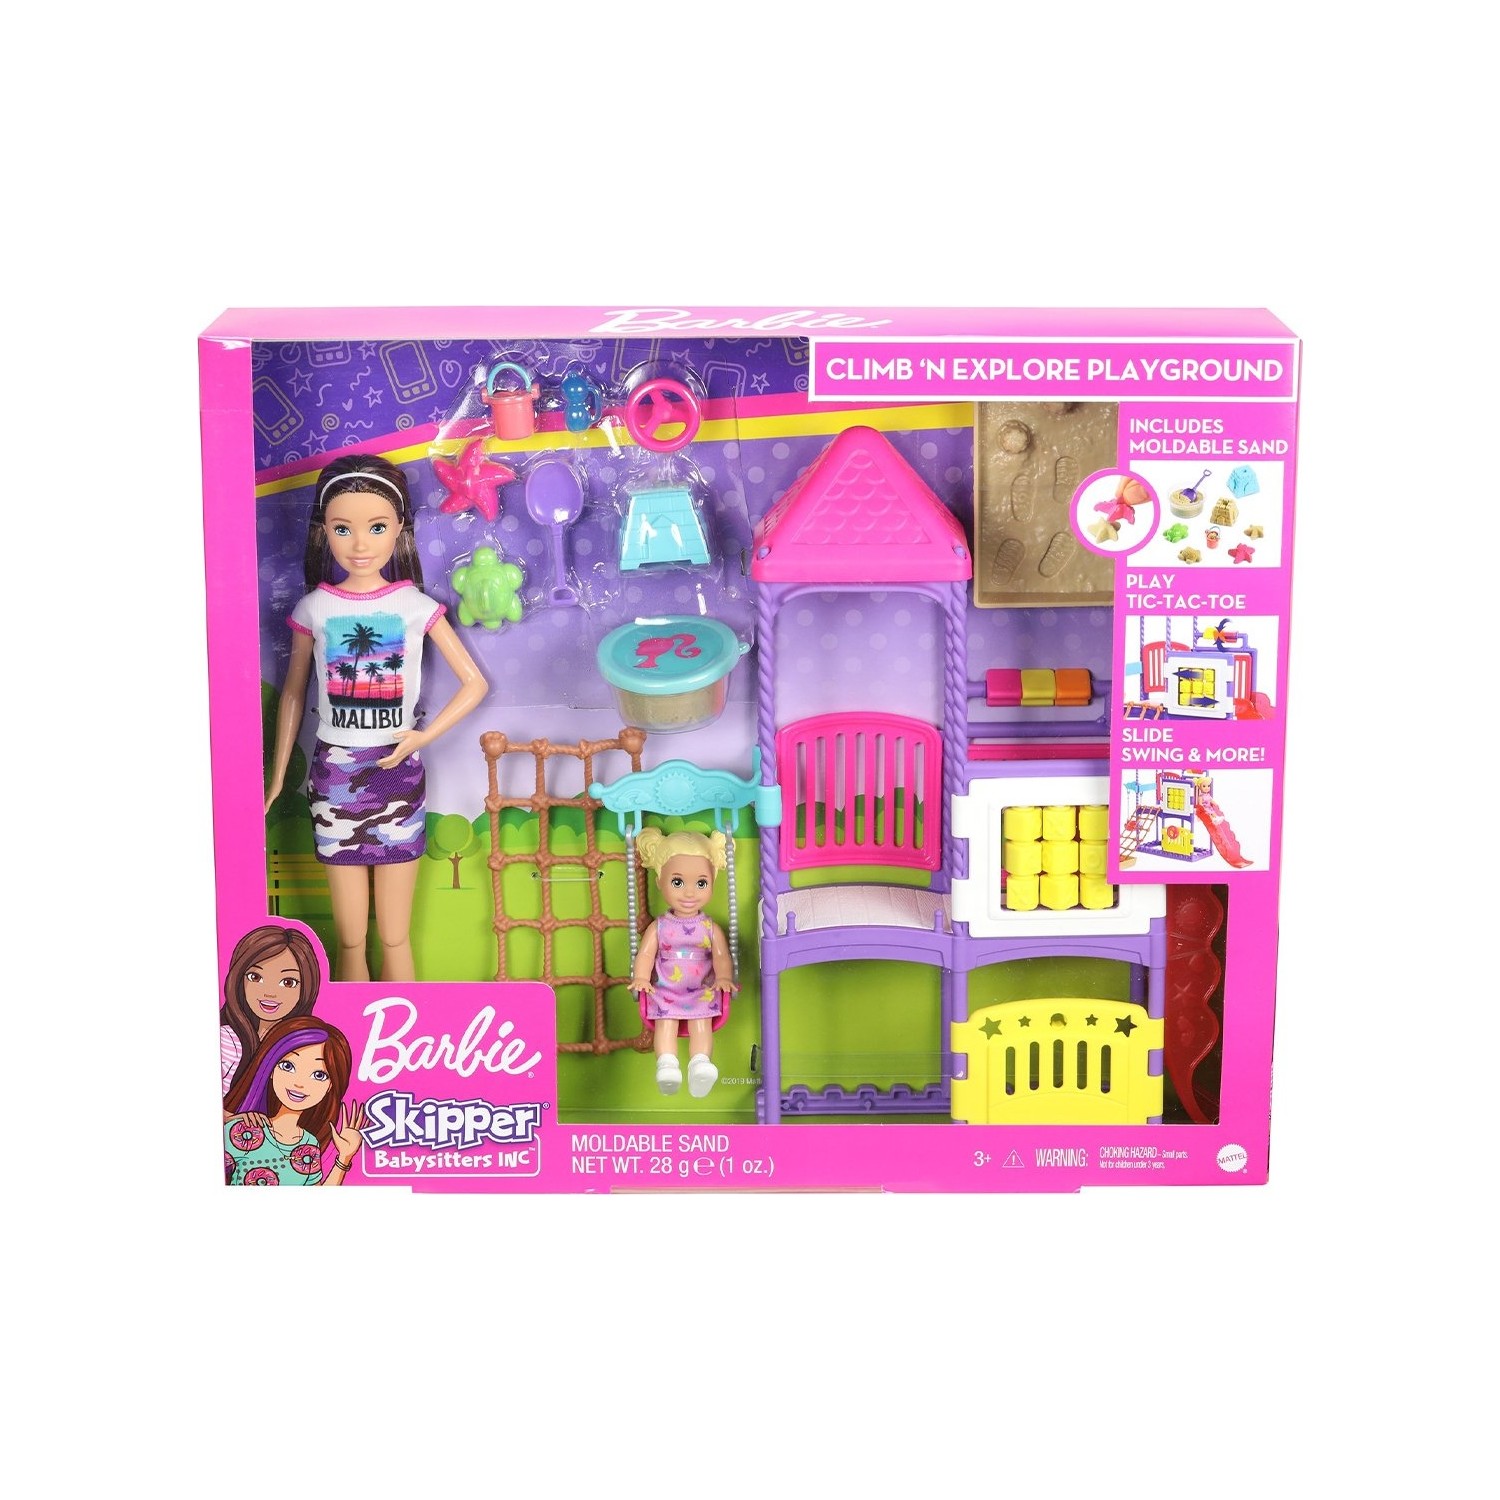 Игровой набор Barbie Skipper Babysitters игровой набор barbie ресторан